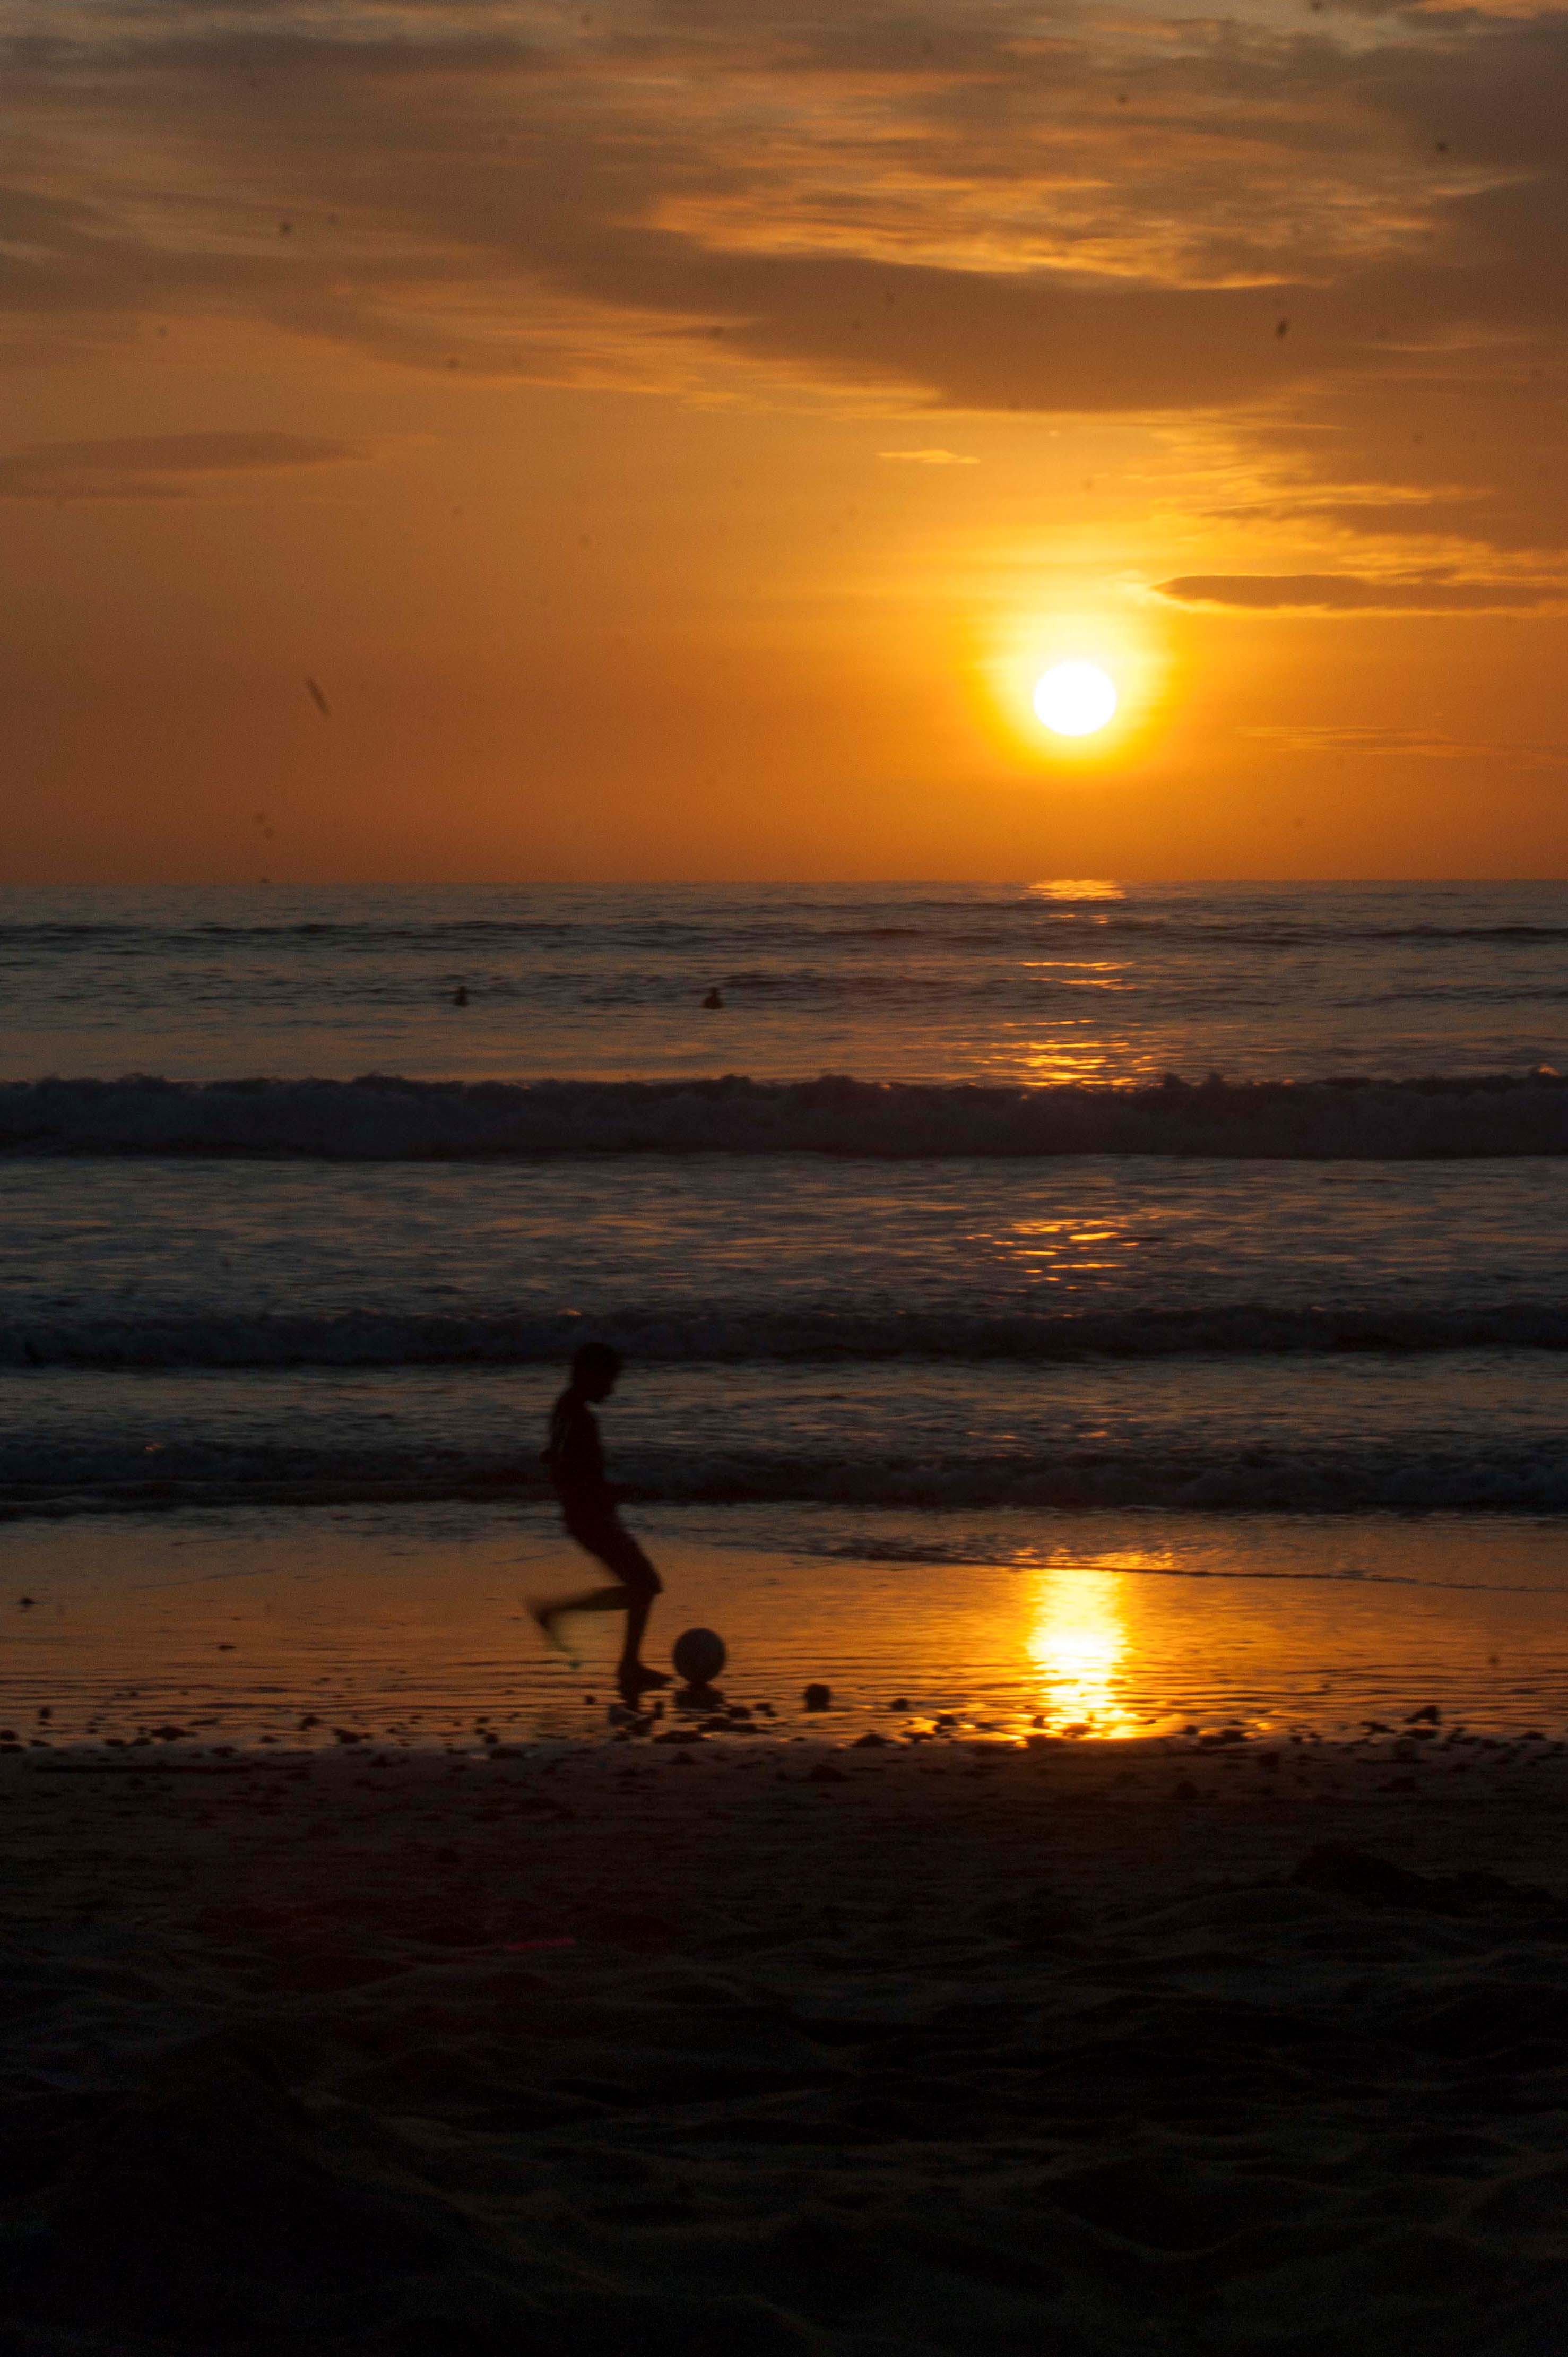 A boy kicking a soccer ball enjoying the sunset in Puerto Lopez